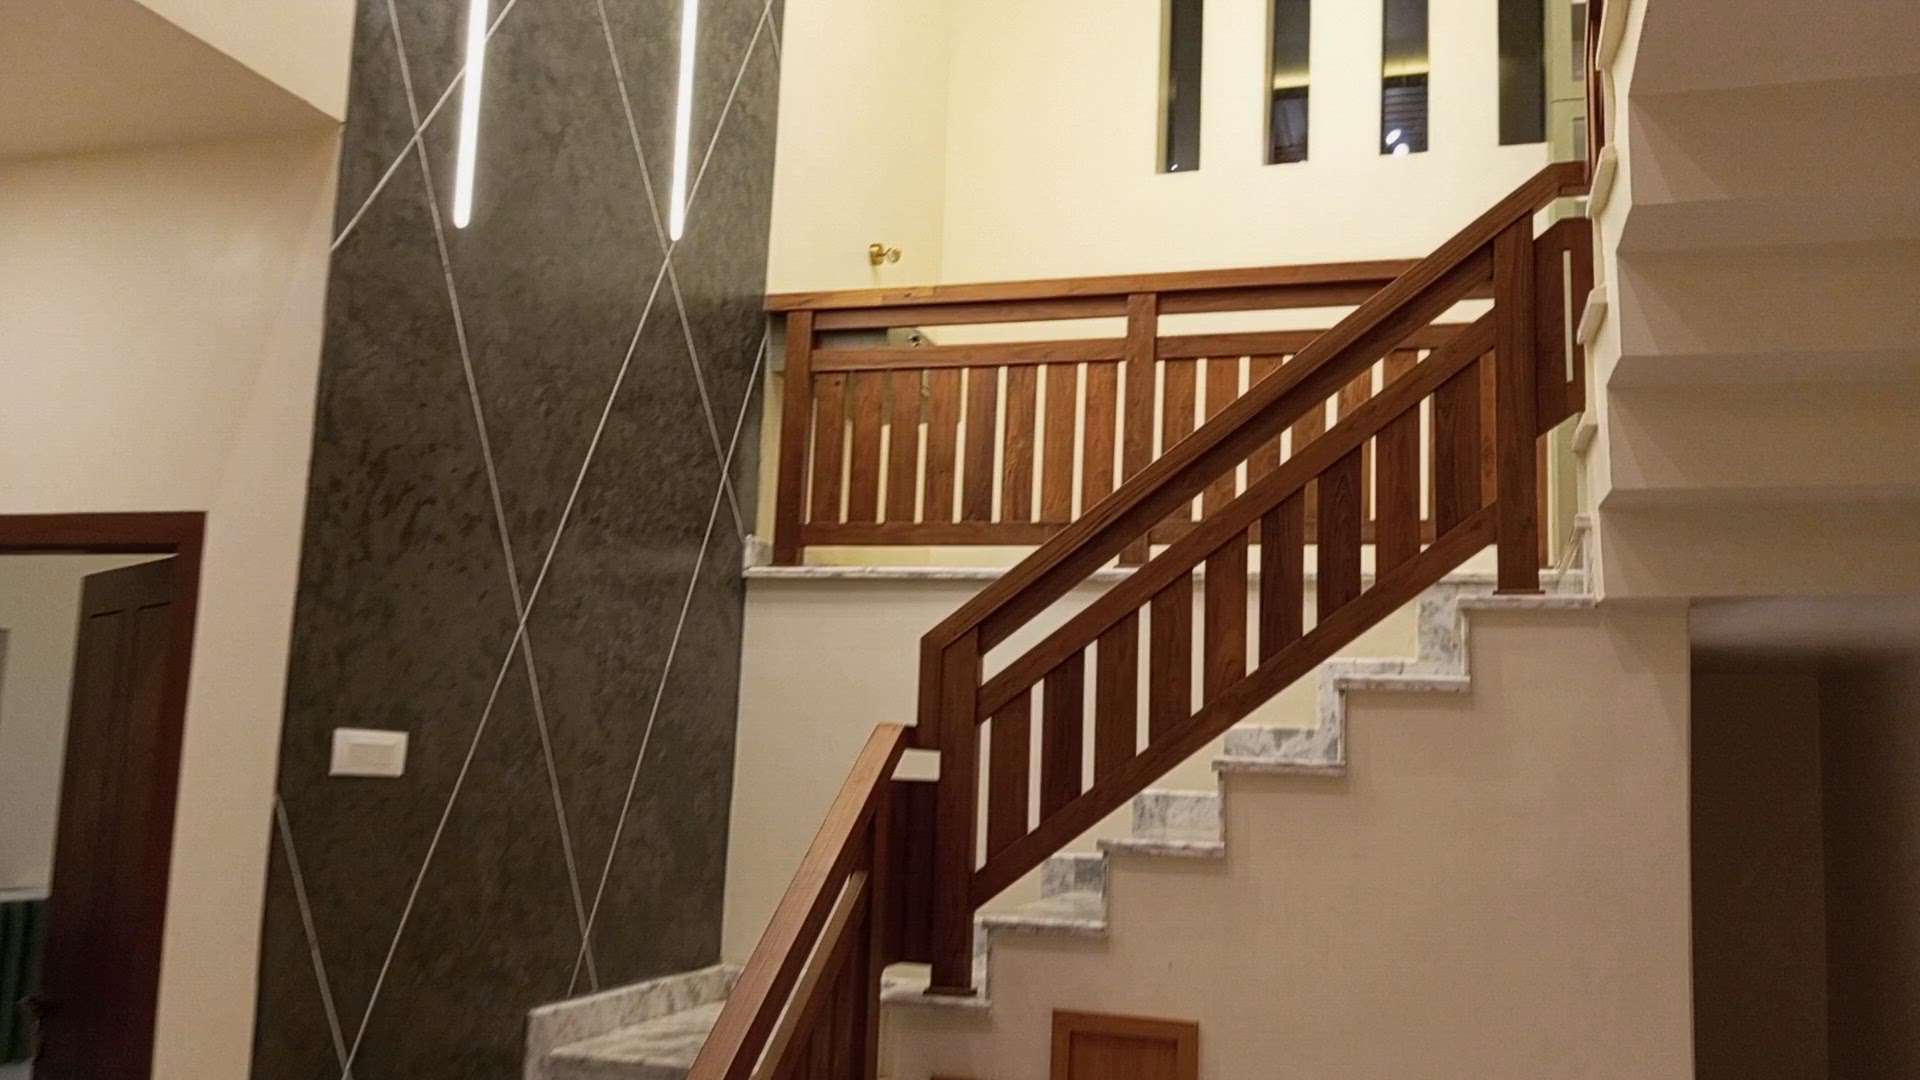 Recently Completed Project @Manjeri.

#StaircaseDecors #StaircaseDesigns #StaircaseIdeas #StaircaseLighting #WoodenStaircase #staircaserailing #stairsrailing #stairtailsdesign 
#CelingLights #chandliers #StaircaseLighting #light
#LivingroomDesigns #formalliving #LivingRoomCarpets #LivingRoomTable #LivingRoomSofa #Sofas #LeatherSofa #LivingRoomPainting #LivingroomTexturePainting #LivingRoomDecoration #LivingRoomCeilingDesign #livingroomdesign  #LivingRoomIdeas #CoffeeTable #curtainsdesign 
#BedroomDecor #KingsizeBedroom #InteriorDesigner #TexturePainting #LivingroomTexturePainting  #Architectural&Interior #MasterBedroom #BedroomDesigns #beatuifuldesign #beautifulhomedesigns #beautifullight #profilelights #Toughened_Glass #glasswardrobe #corian #coriancountertop #romanblinds #dressinginterior #dressingunit #interiordesign #interiordesignkerala #girlsroom #TexturePainting #bigrooms #BedroomIdeas #BedroomCeilingDesign #LUXURY_BED #bedsidetable #sidetable #bedroomdeaignideas